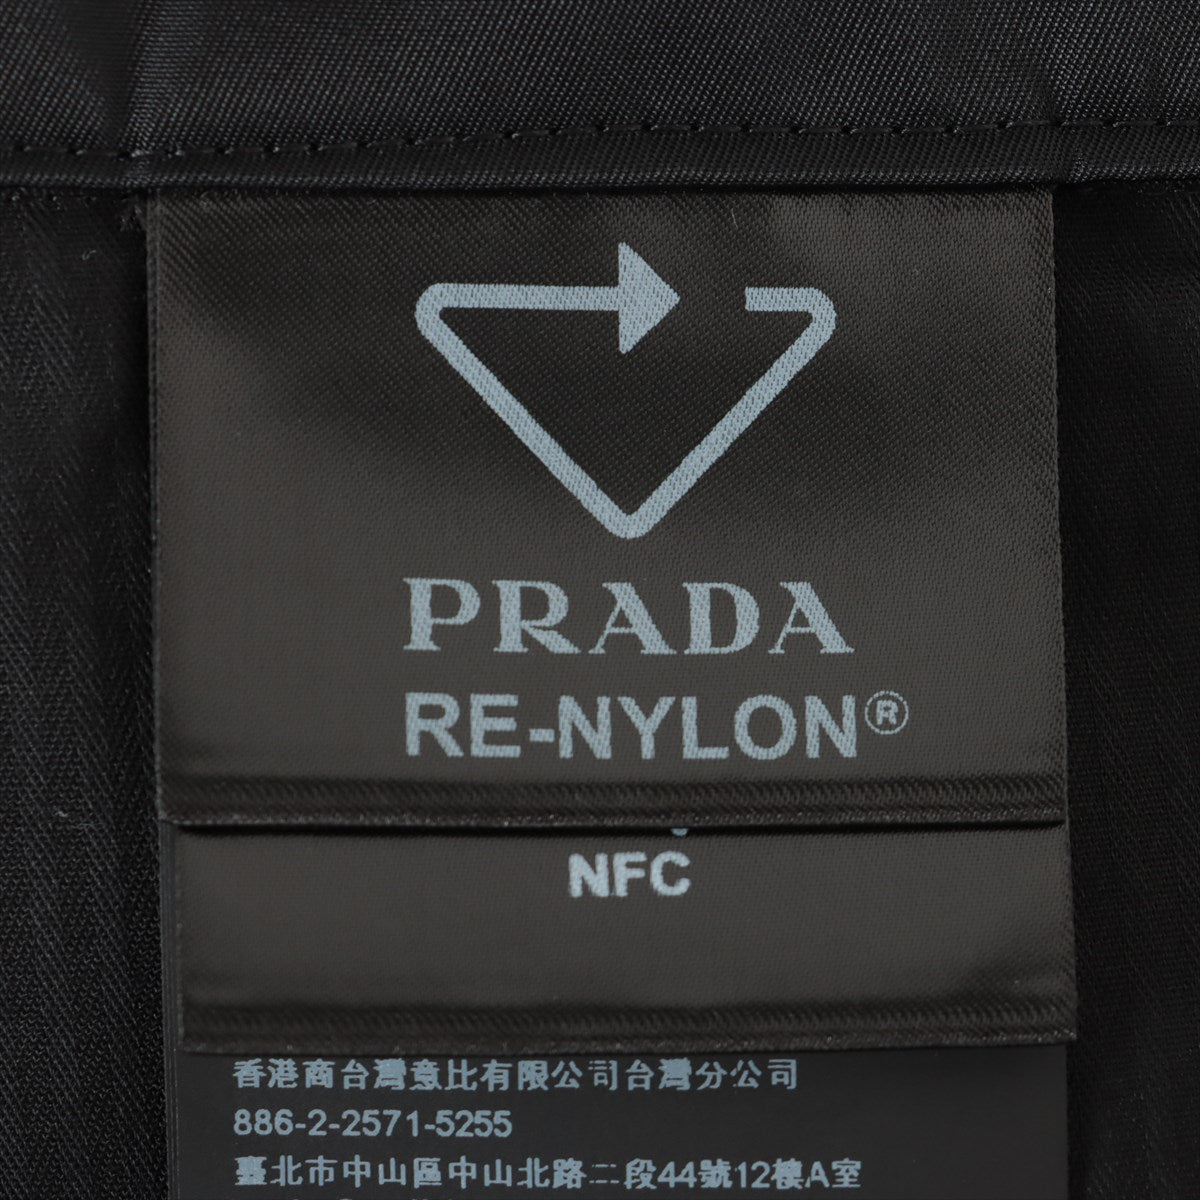 Prada Re Nylon Re Nylon 23 years Nylon Pants 48 Men's Black  DNA911 Bermuda shorts Triangle logo